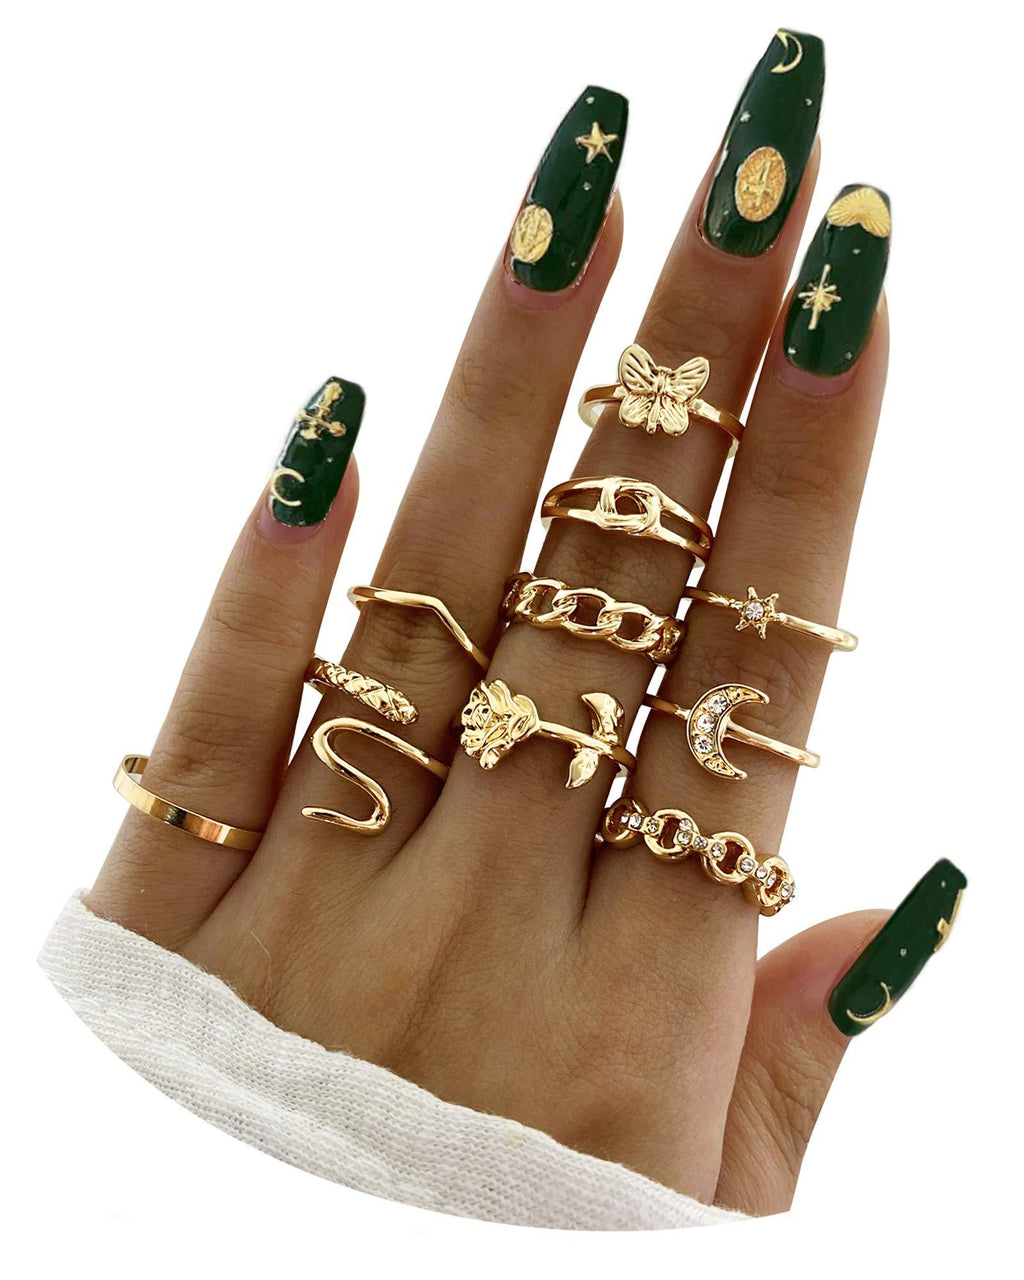 [Australia] - Gold Rings Set for Women Girls Snake Chain Knuckle Stacking Ring Vintage BOHO Midi Rings SIze Mixed Design 1 